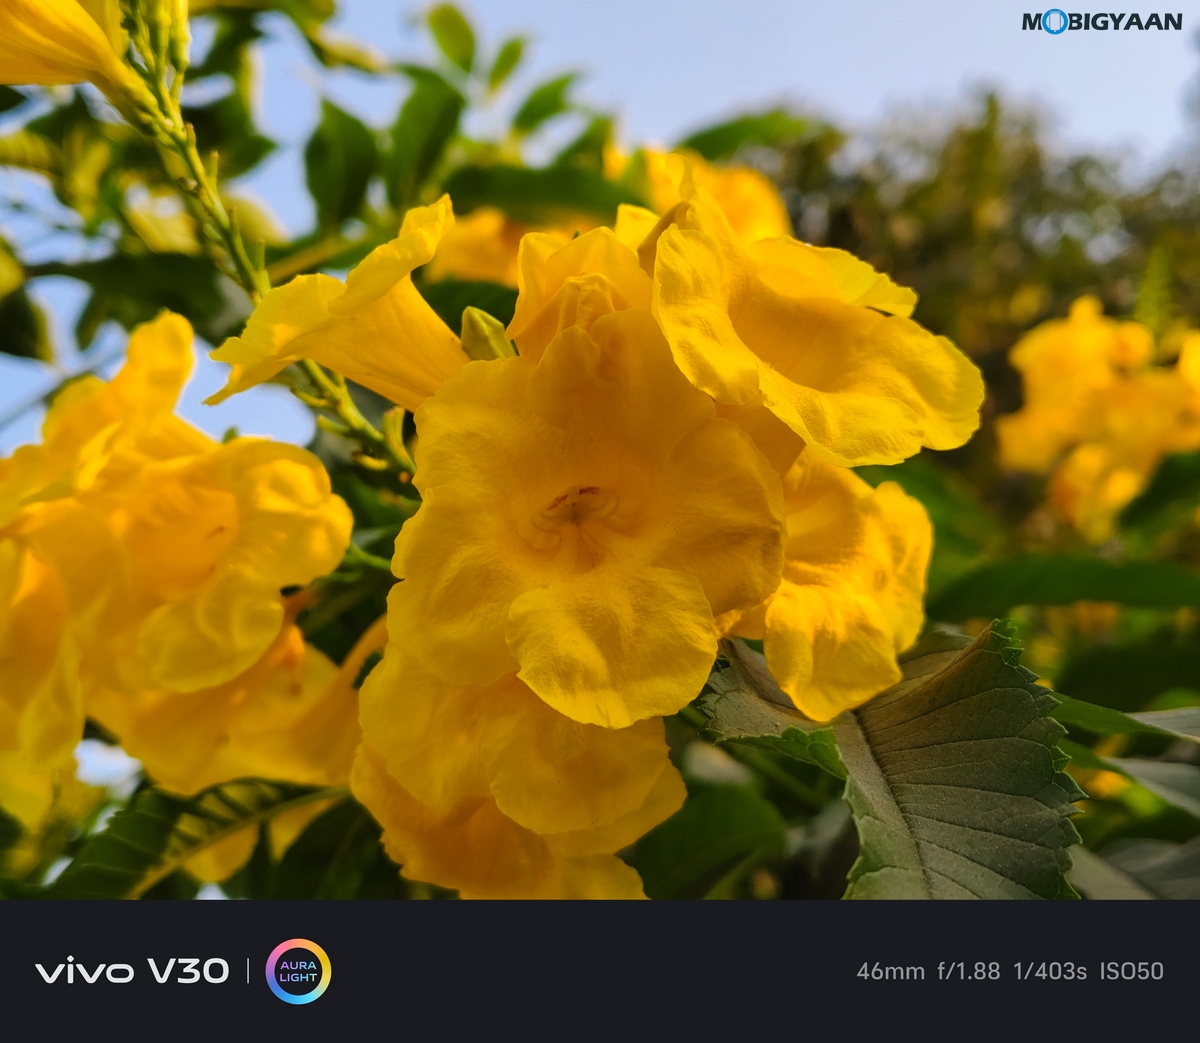 vivo V30 Review Camera Samples 1